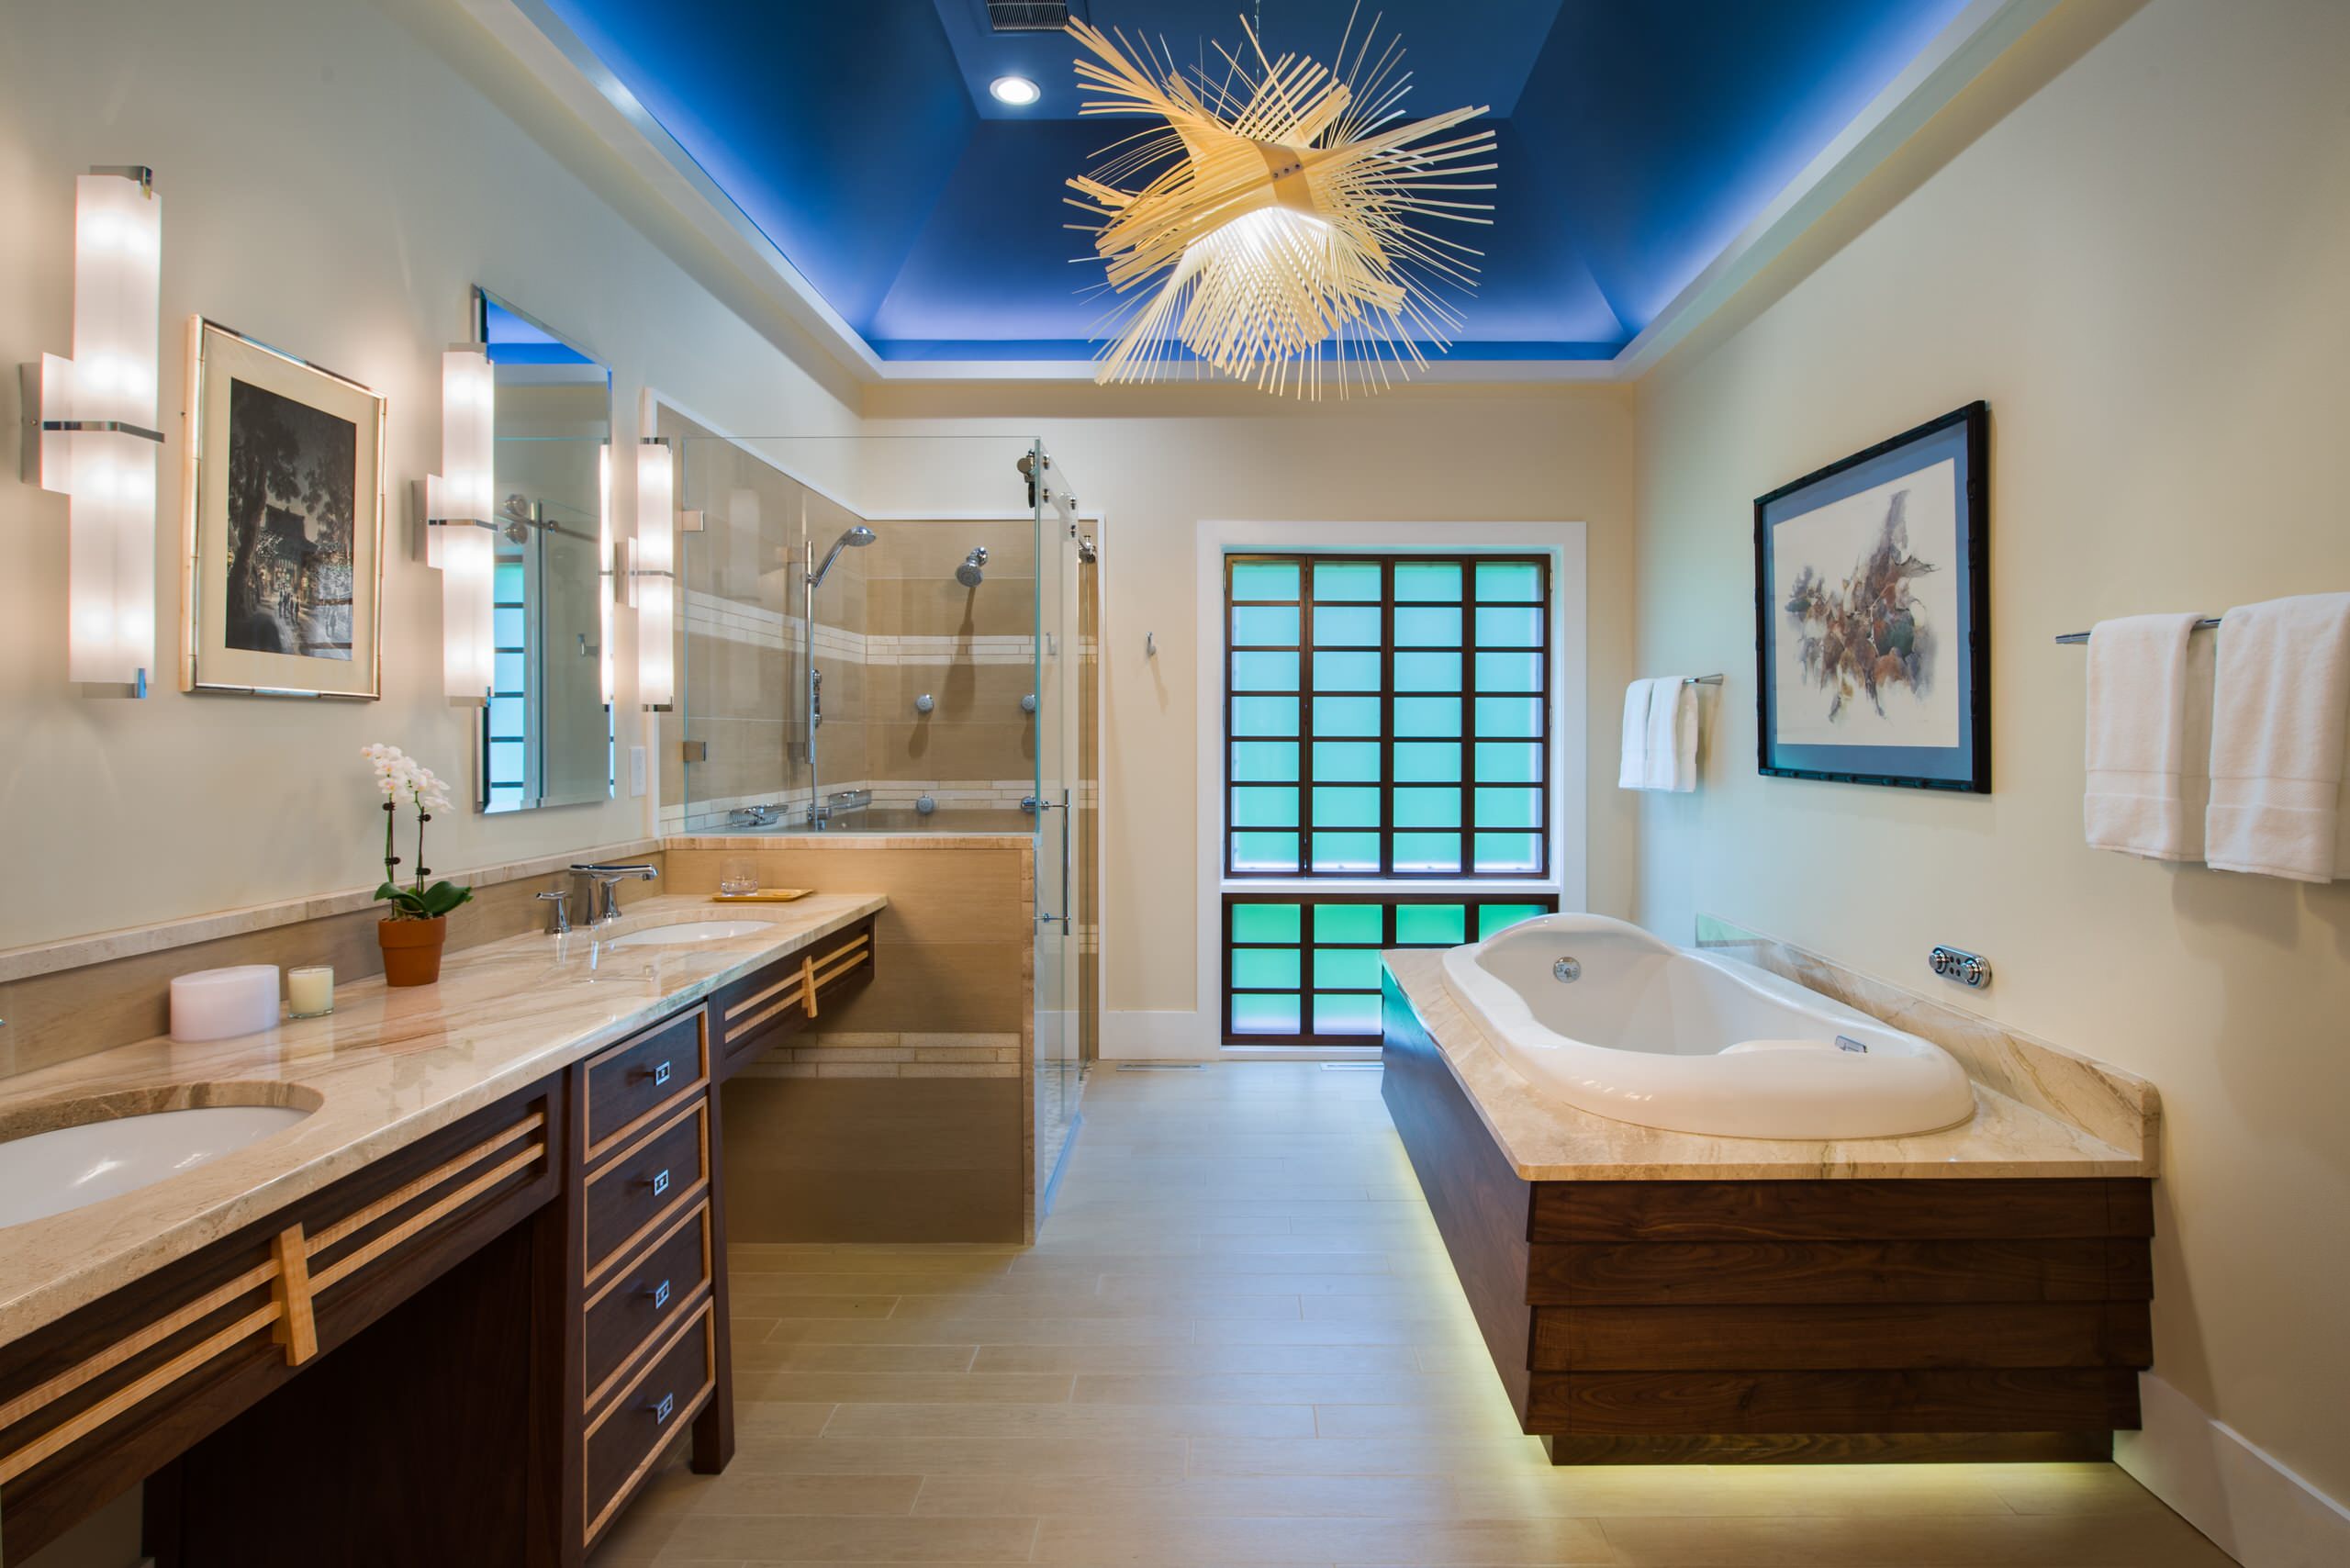 Luxury Japanese Inspired Ada Accessible Bath Douglas R Schotland Architect Img~a351fe560fc9ff9c 14 9019 1 8d5aae4 